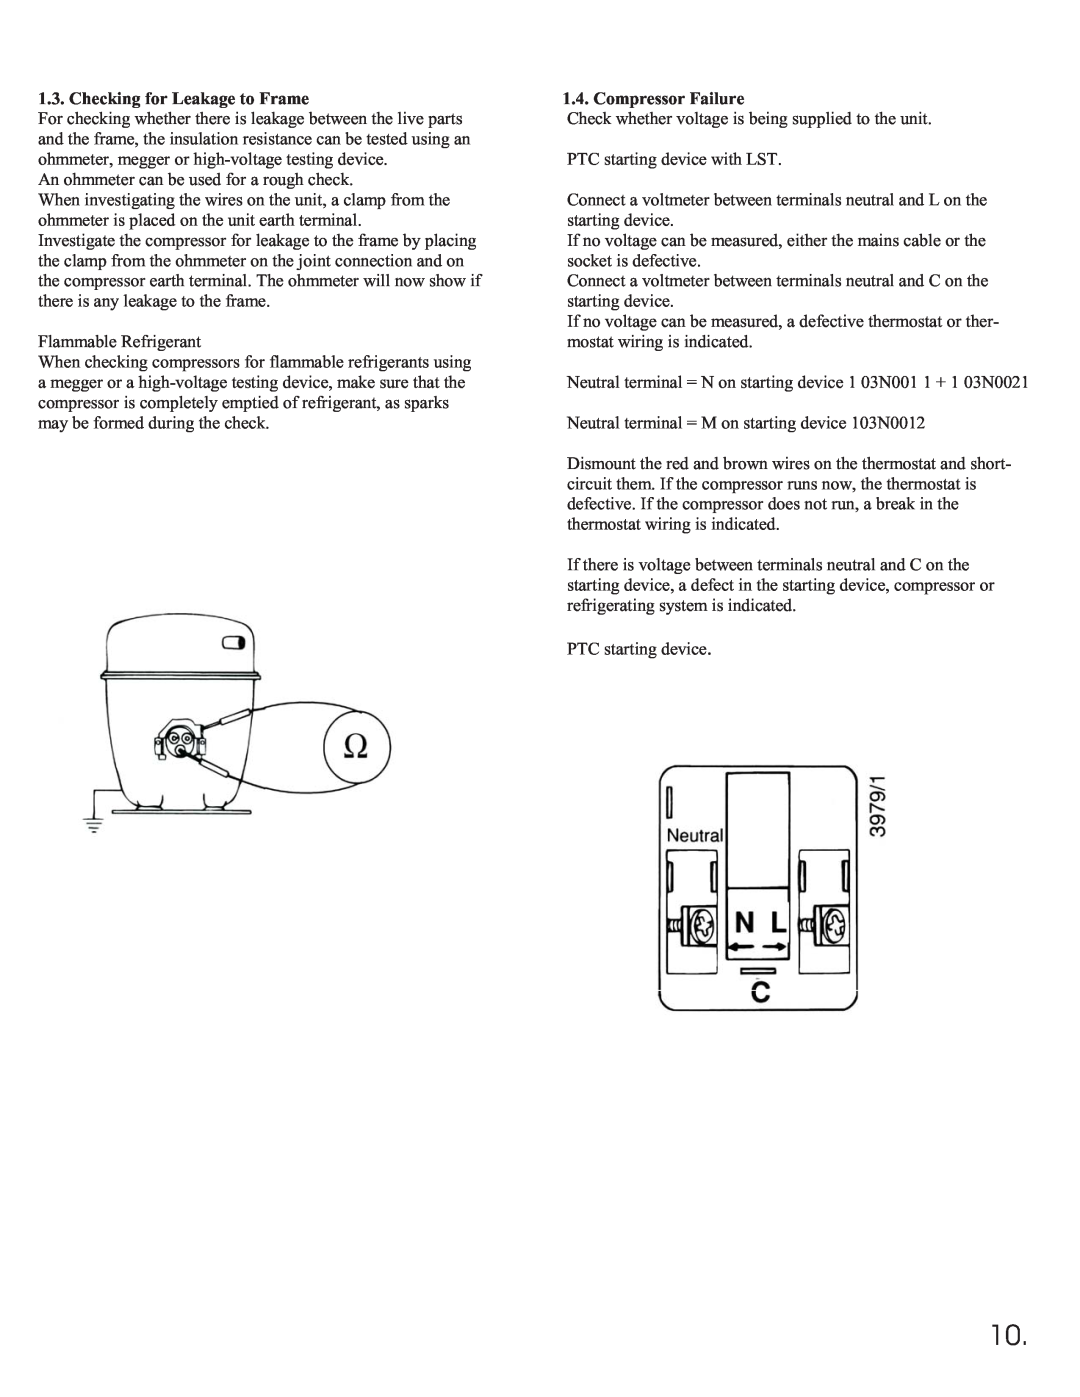 Equator 375 service manual Checking for Leakage to Frame, Compressor Failure 